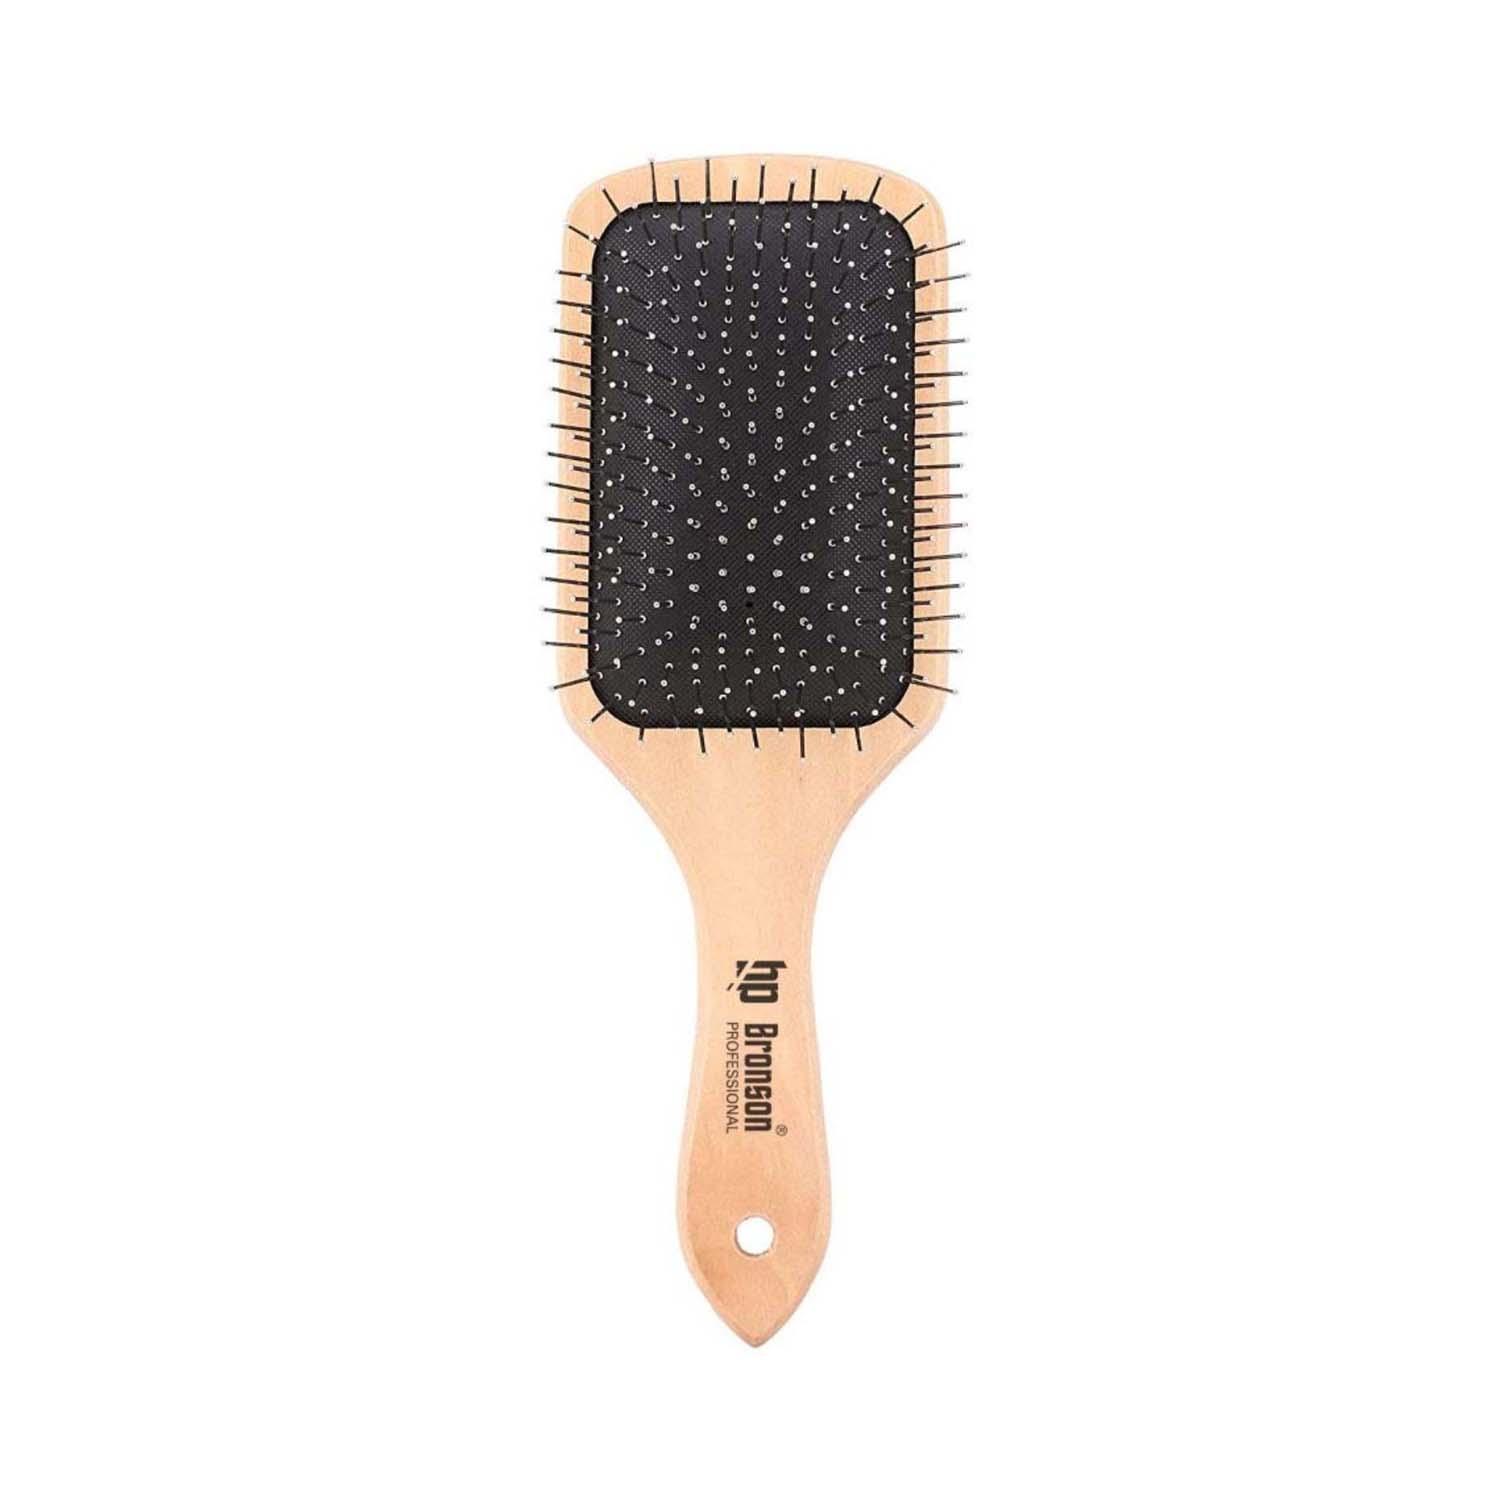 Bronson Professional | Bronson Professional Paddle Wooden With Steel Bristles Hair Brush